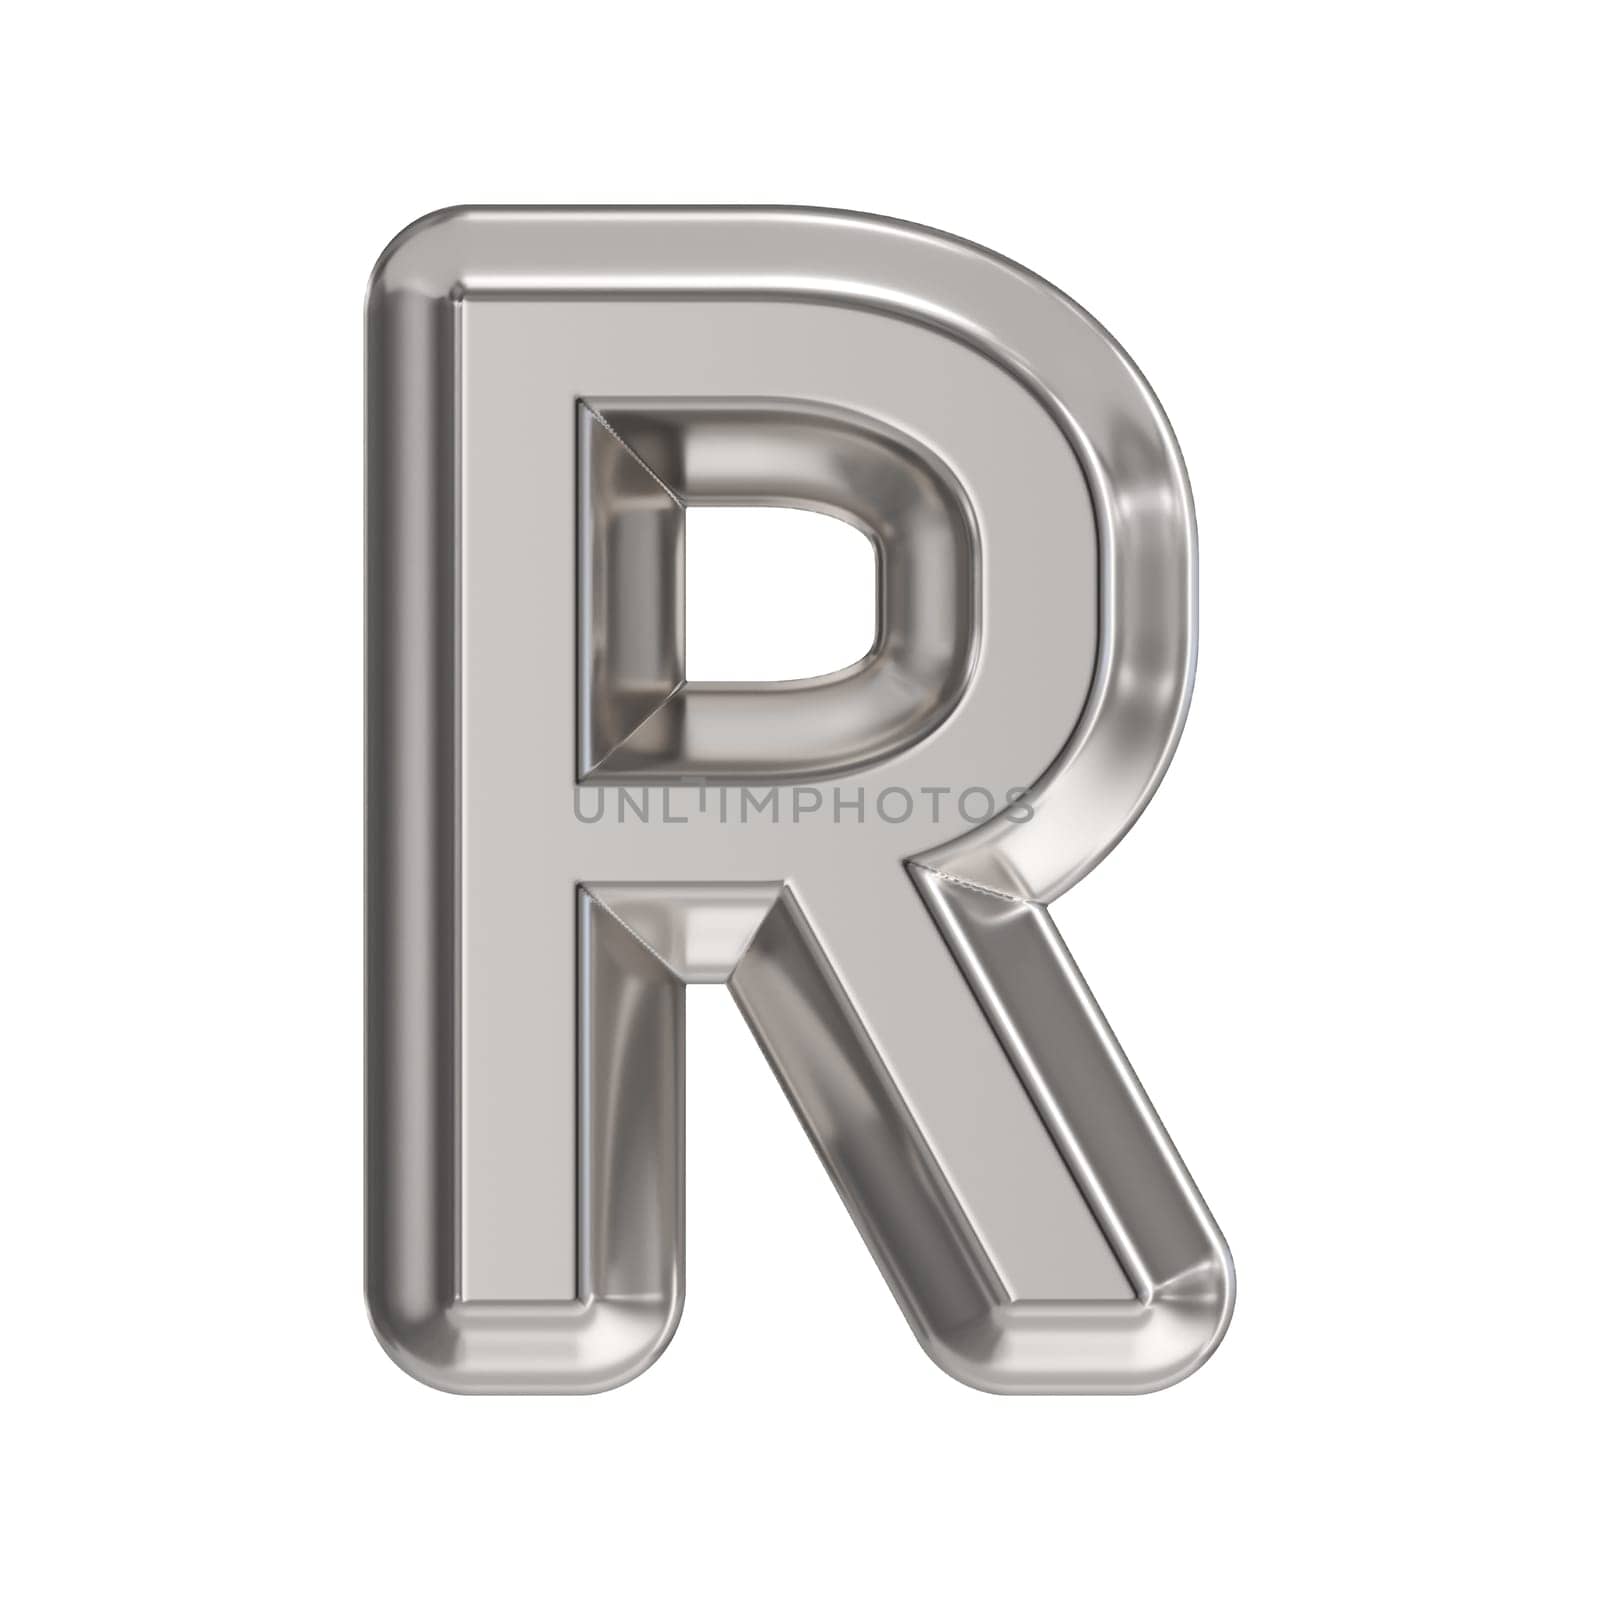 Steel font Letter R 3D rendering illustration isolated on white background